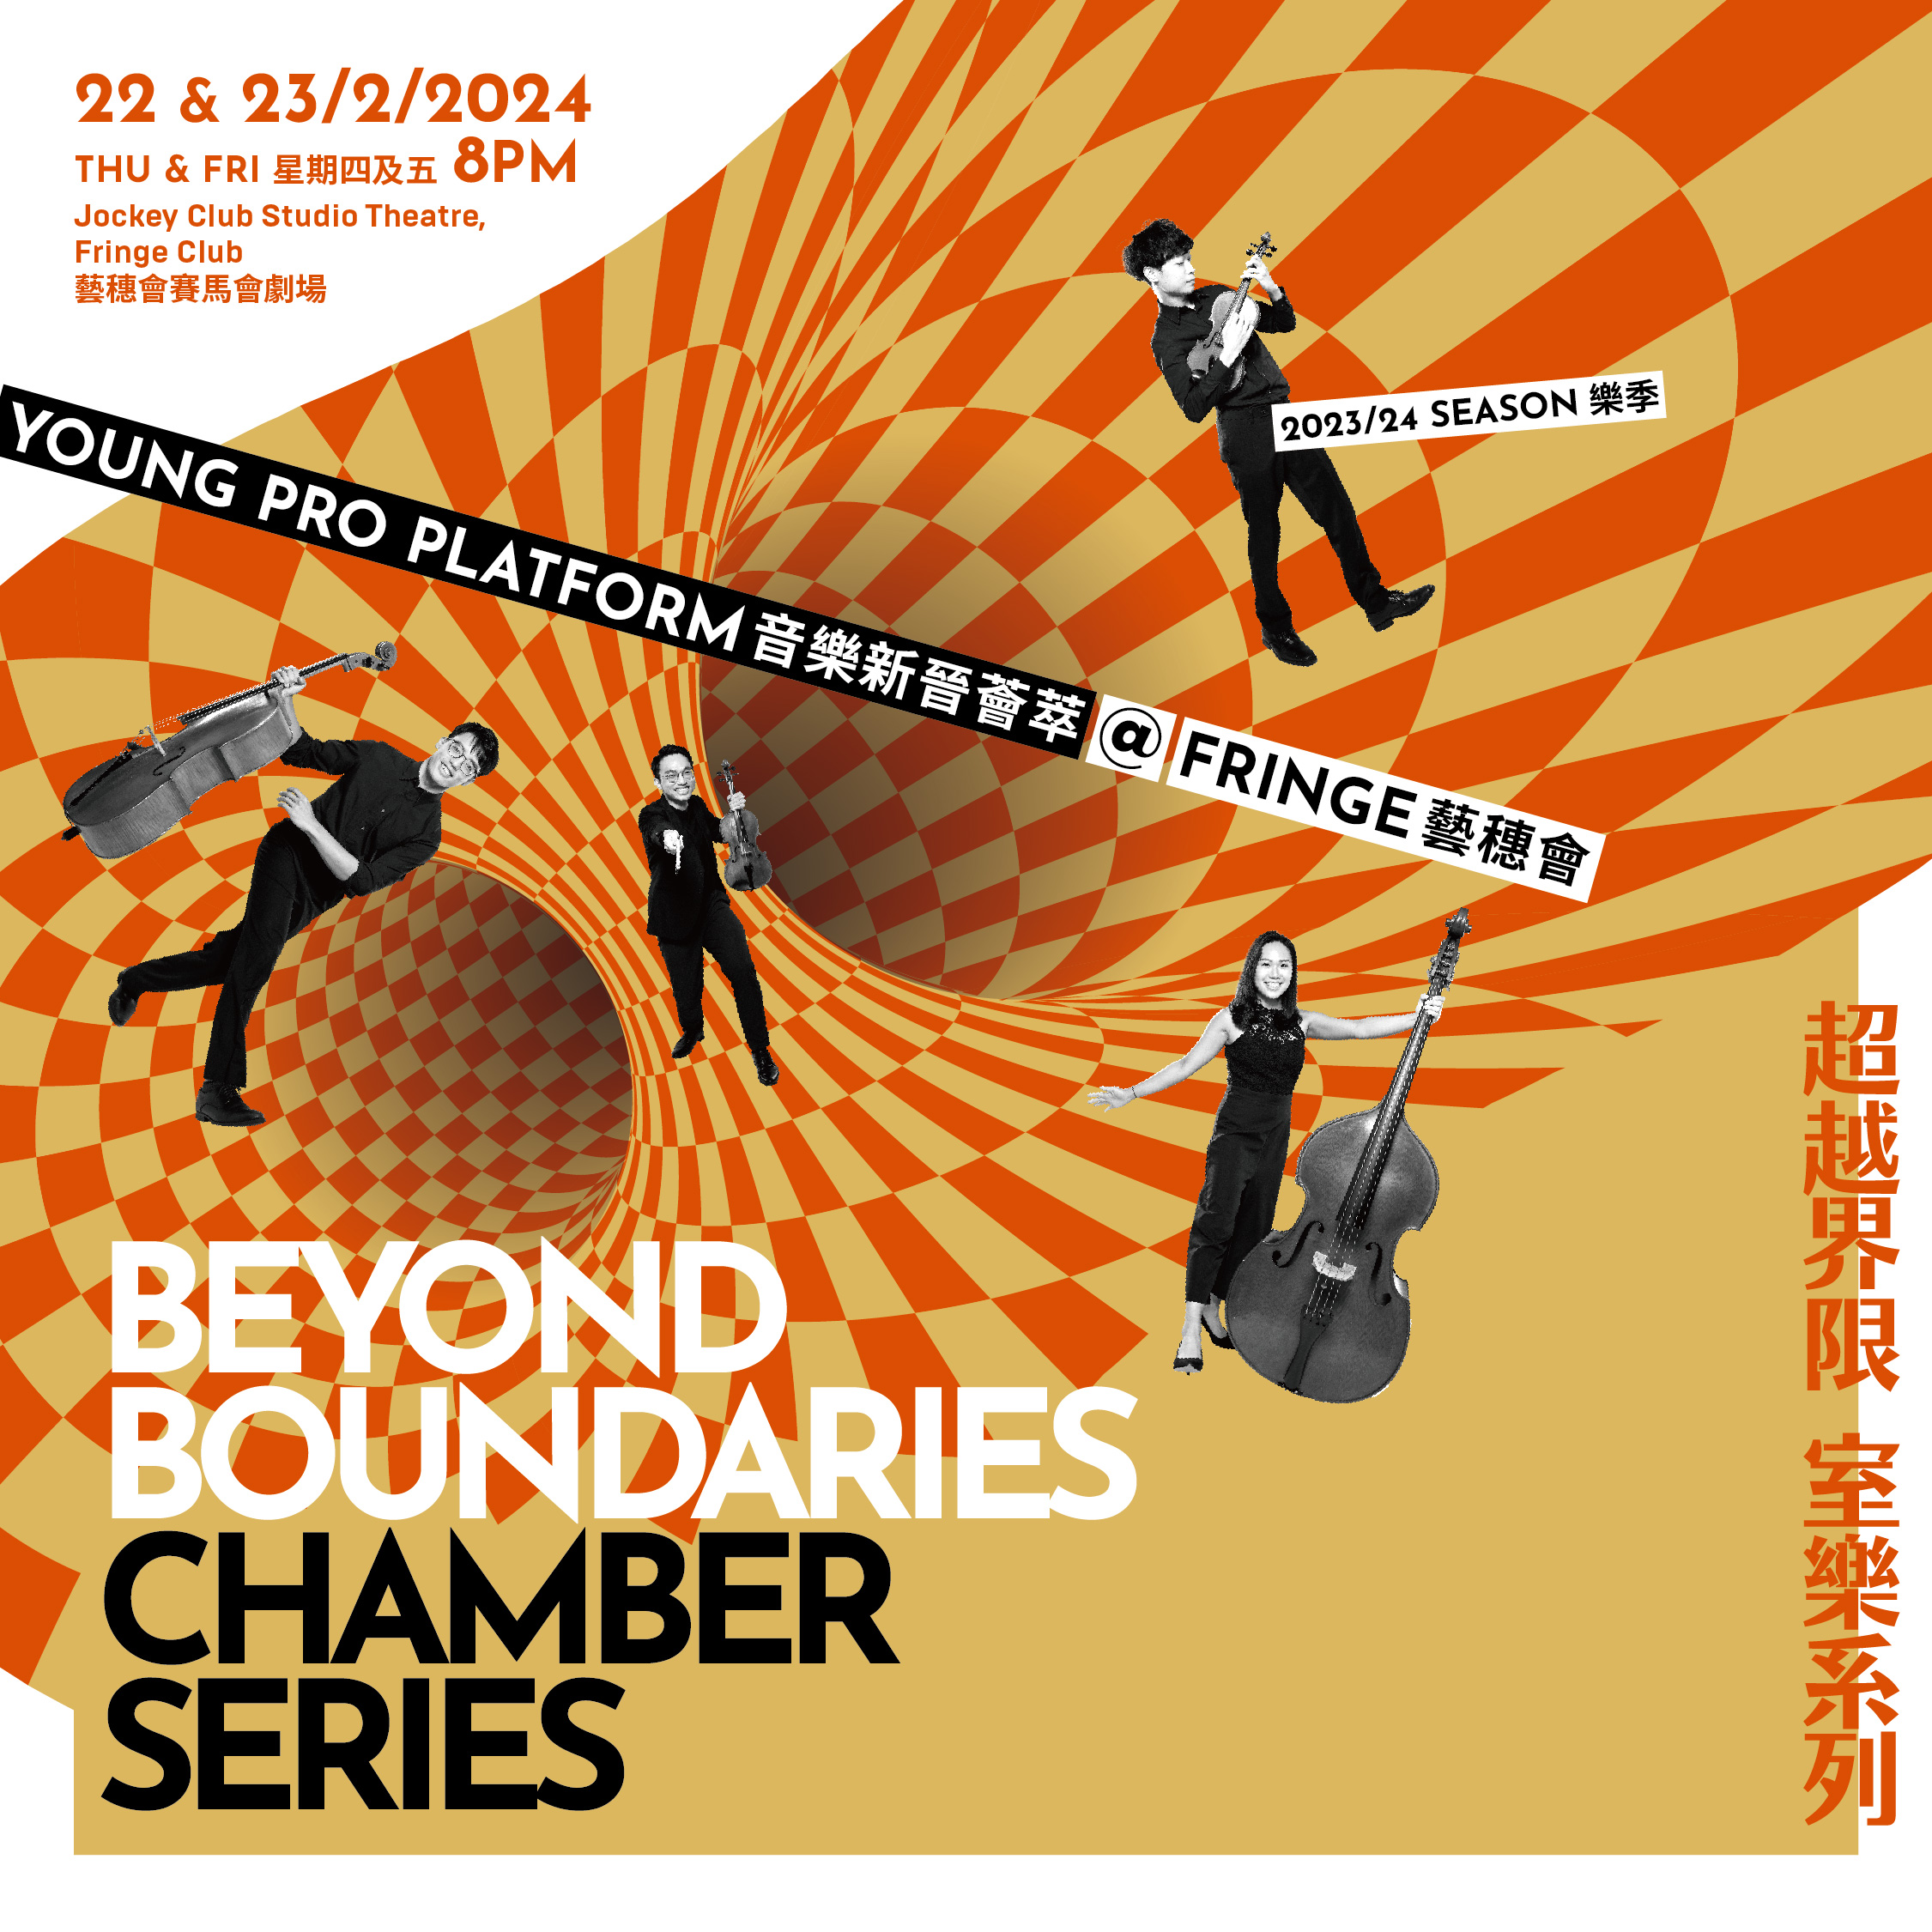 Beyond Boundaries Chamber Series: YPP @Fringe - The Orchestra Academy Hong  Kong